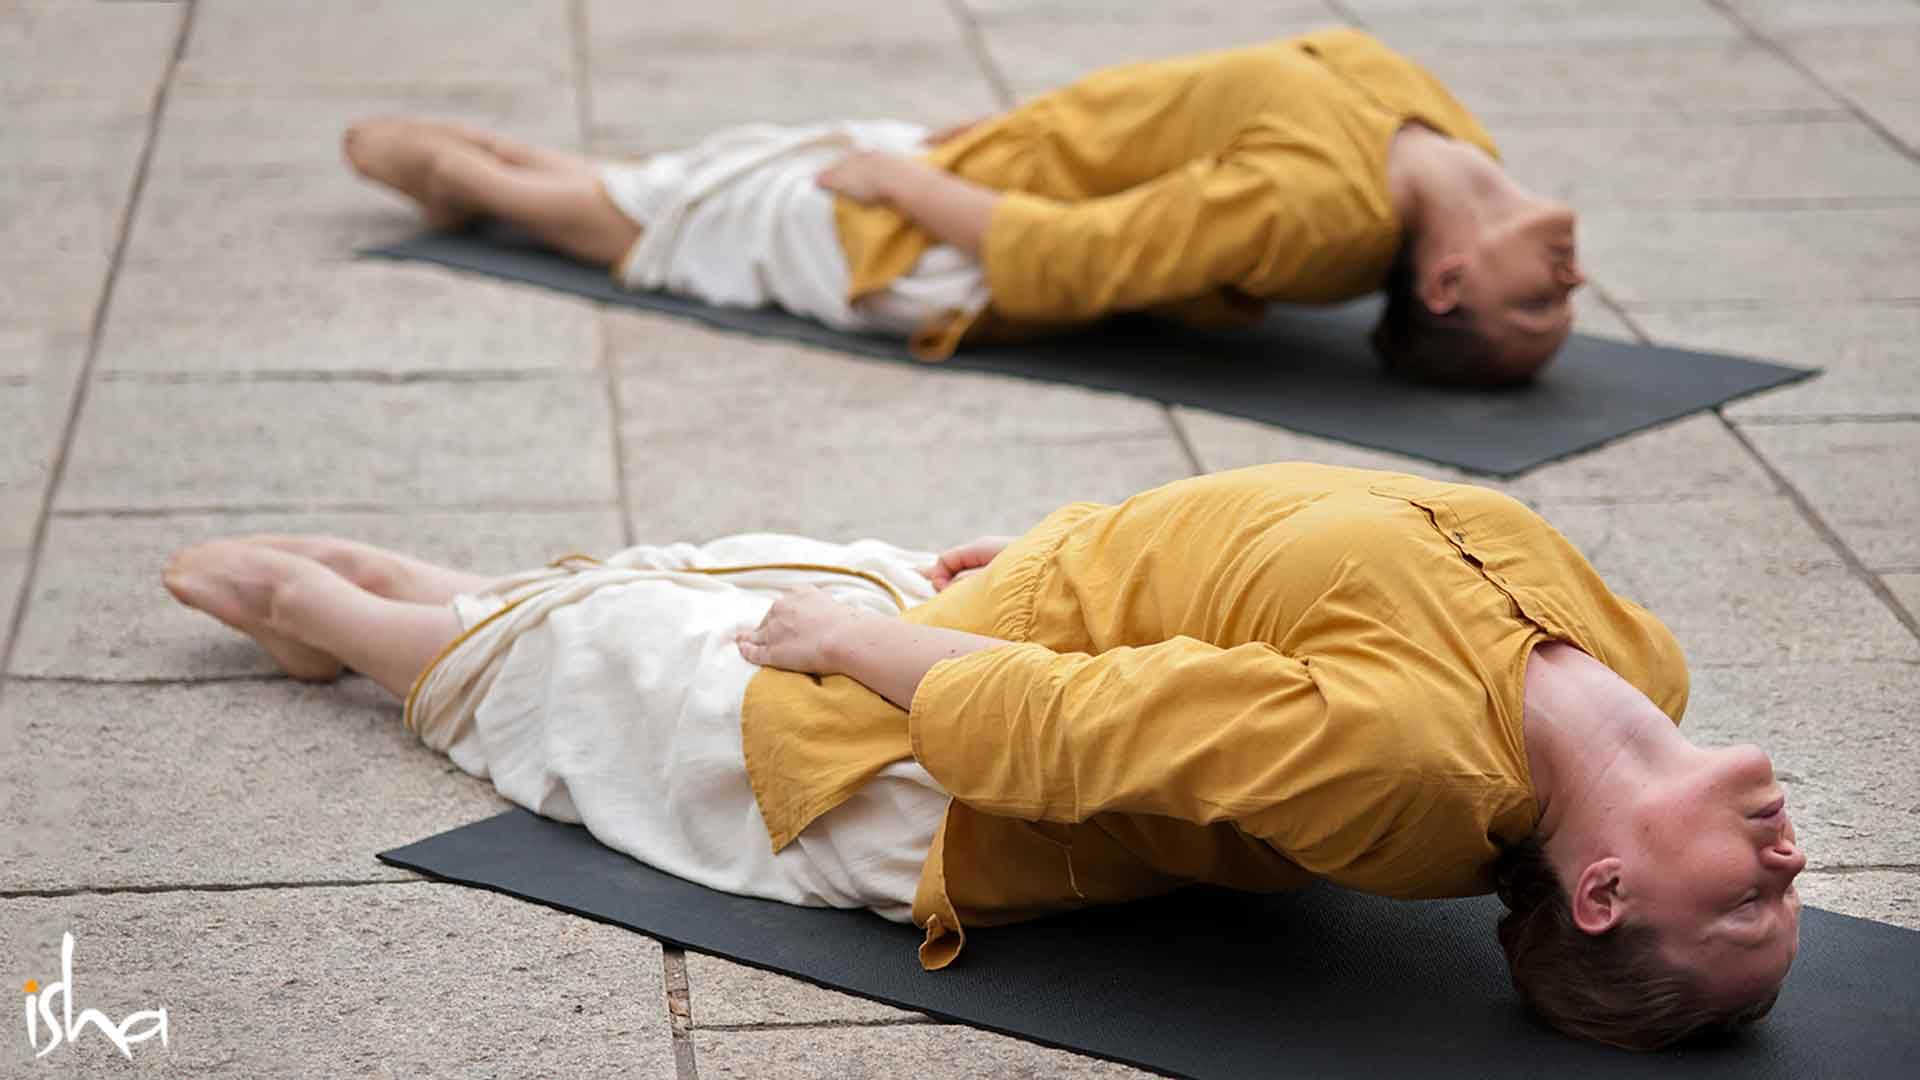 Isha Hatha Yoga - Yogasanas | Thane W | Oct 13 - 15, 2017 | Mumbai - Mumbai  | MeraEvents.com